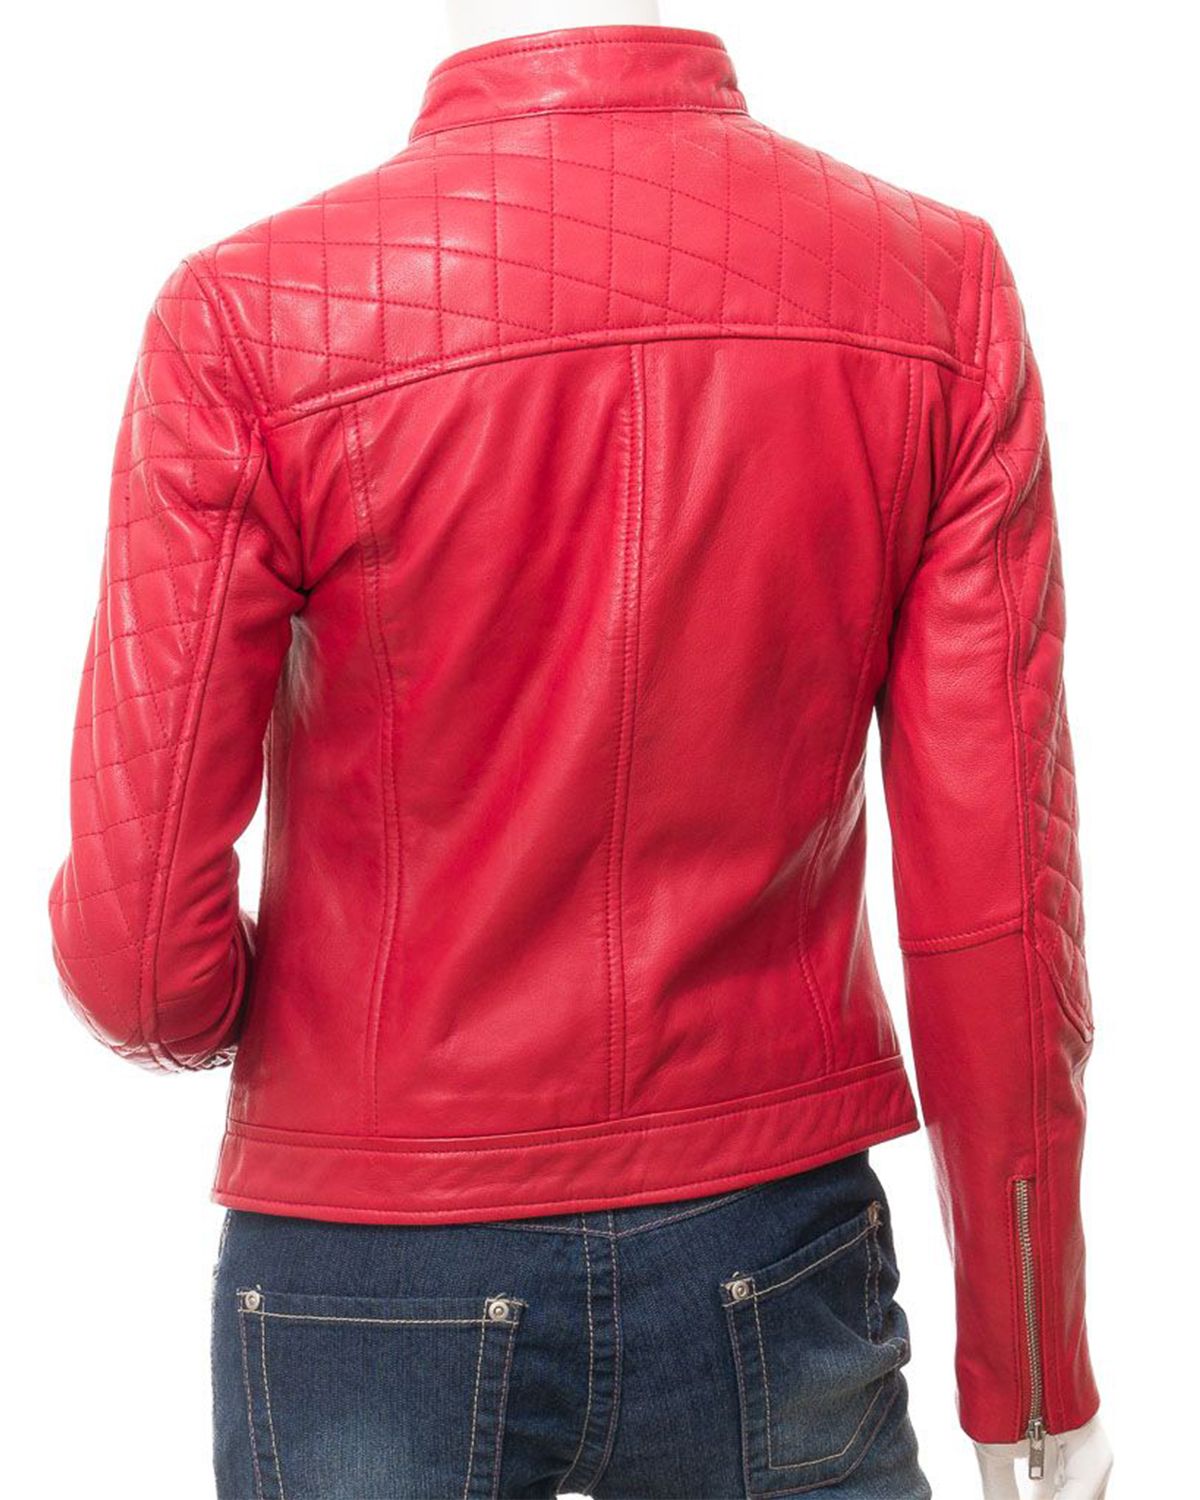 Elite Women's Quilted Shoulder Stylish Biker Cafe Racer Style Real Leather Jacket